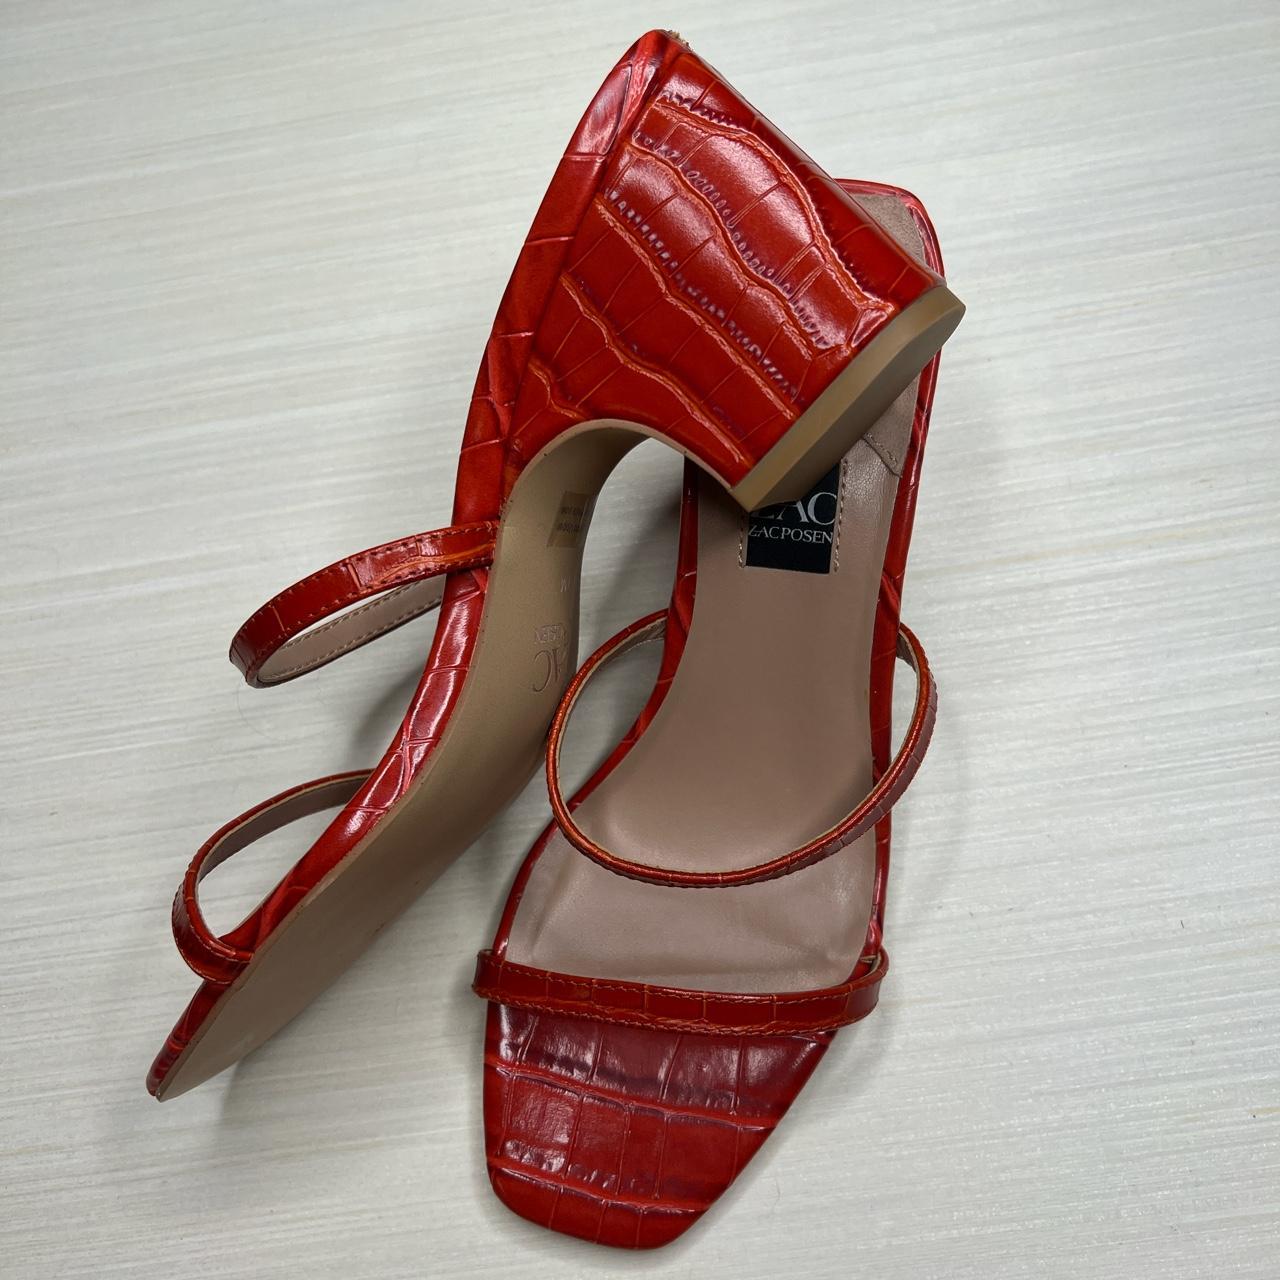 Zac Posen Women's Red Sandals (2)